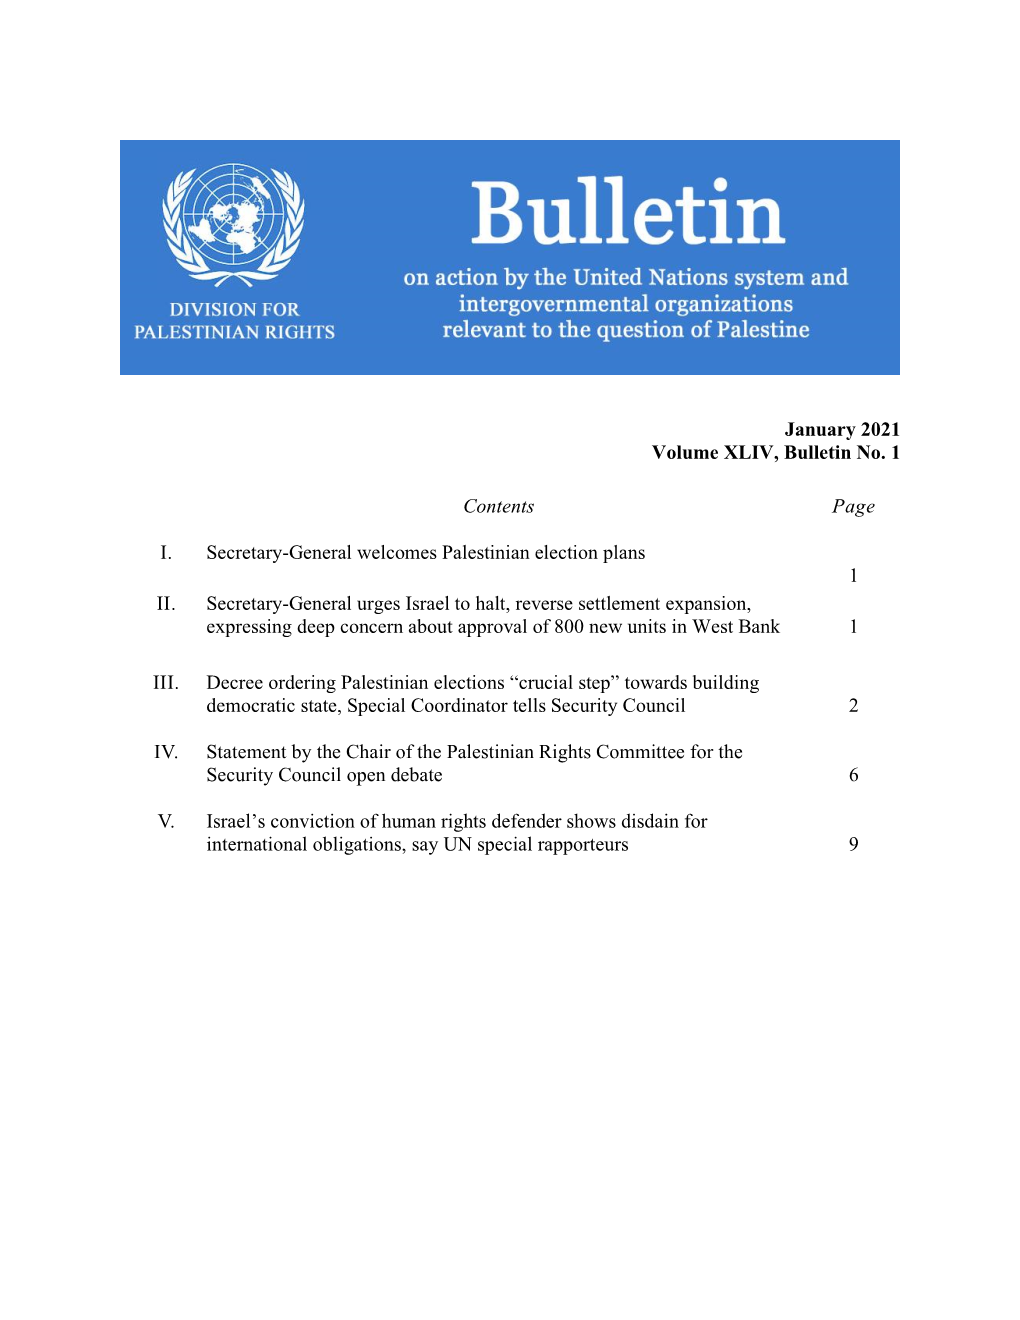 January 2021 Volume XLIV, Bulletin No. 1 Contents Page I. Secretary